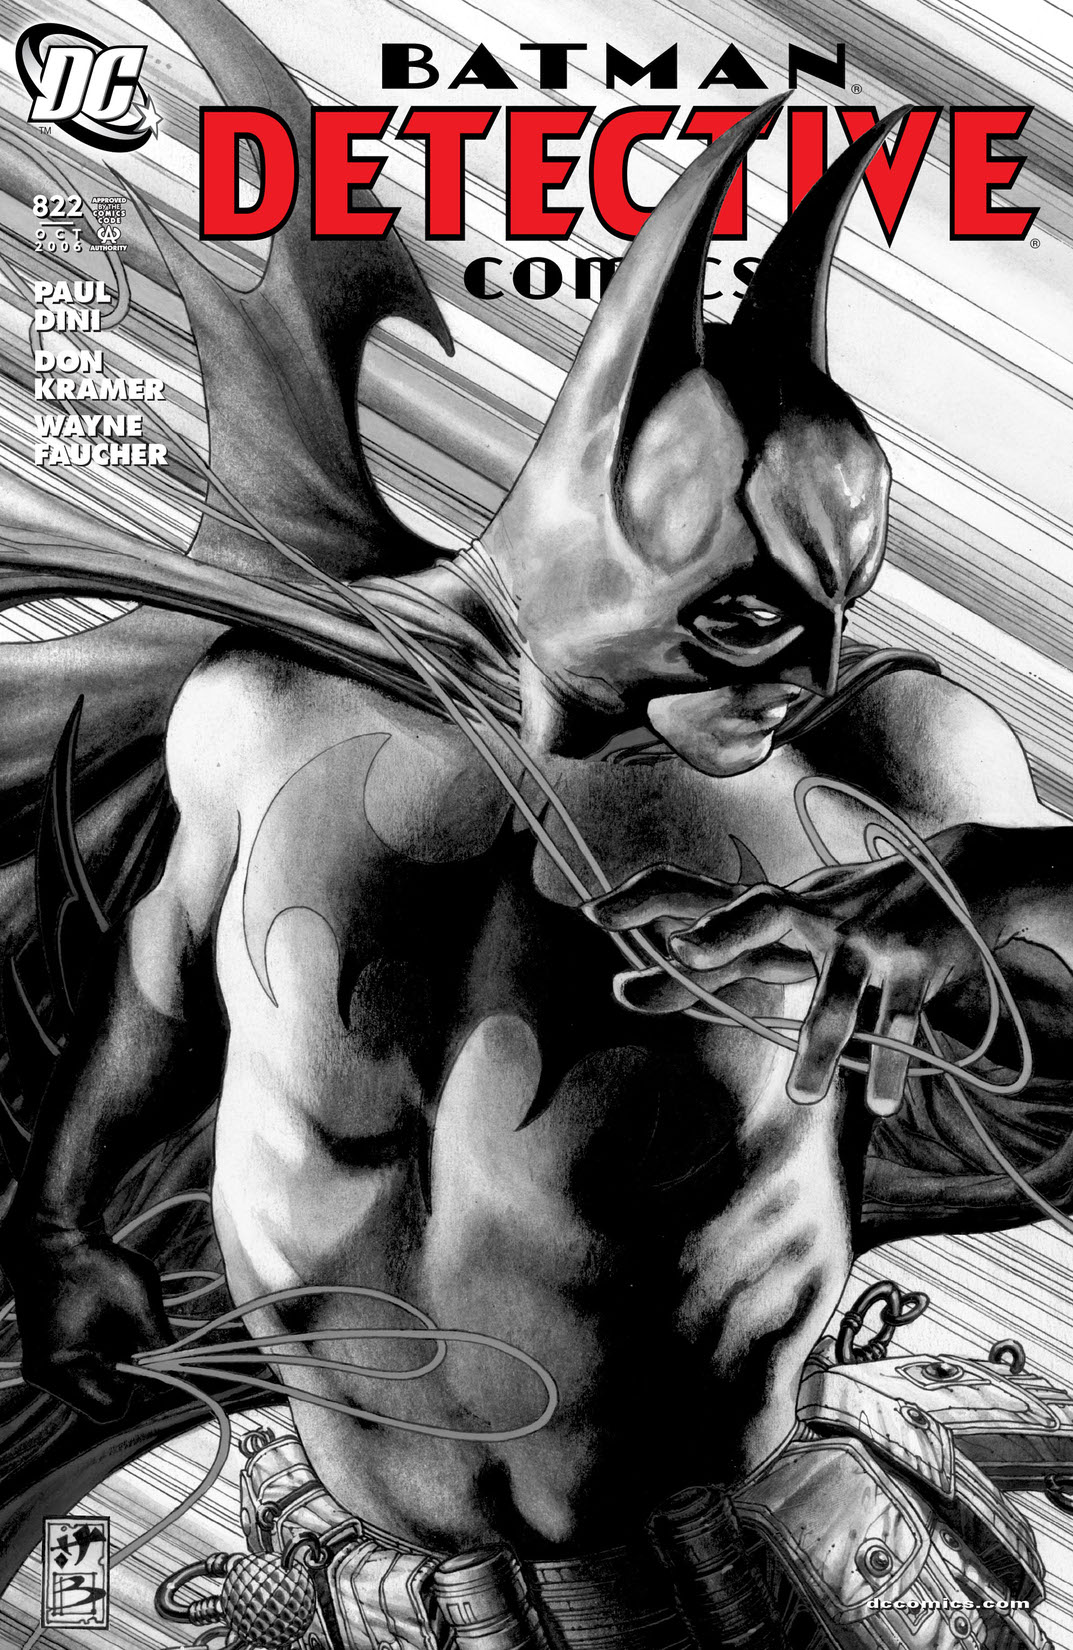 Detective Comics (1937-) #822 preview images